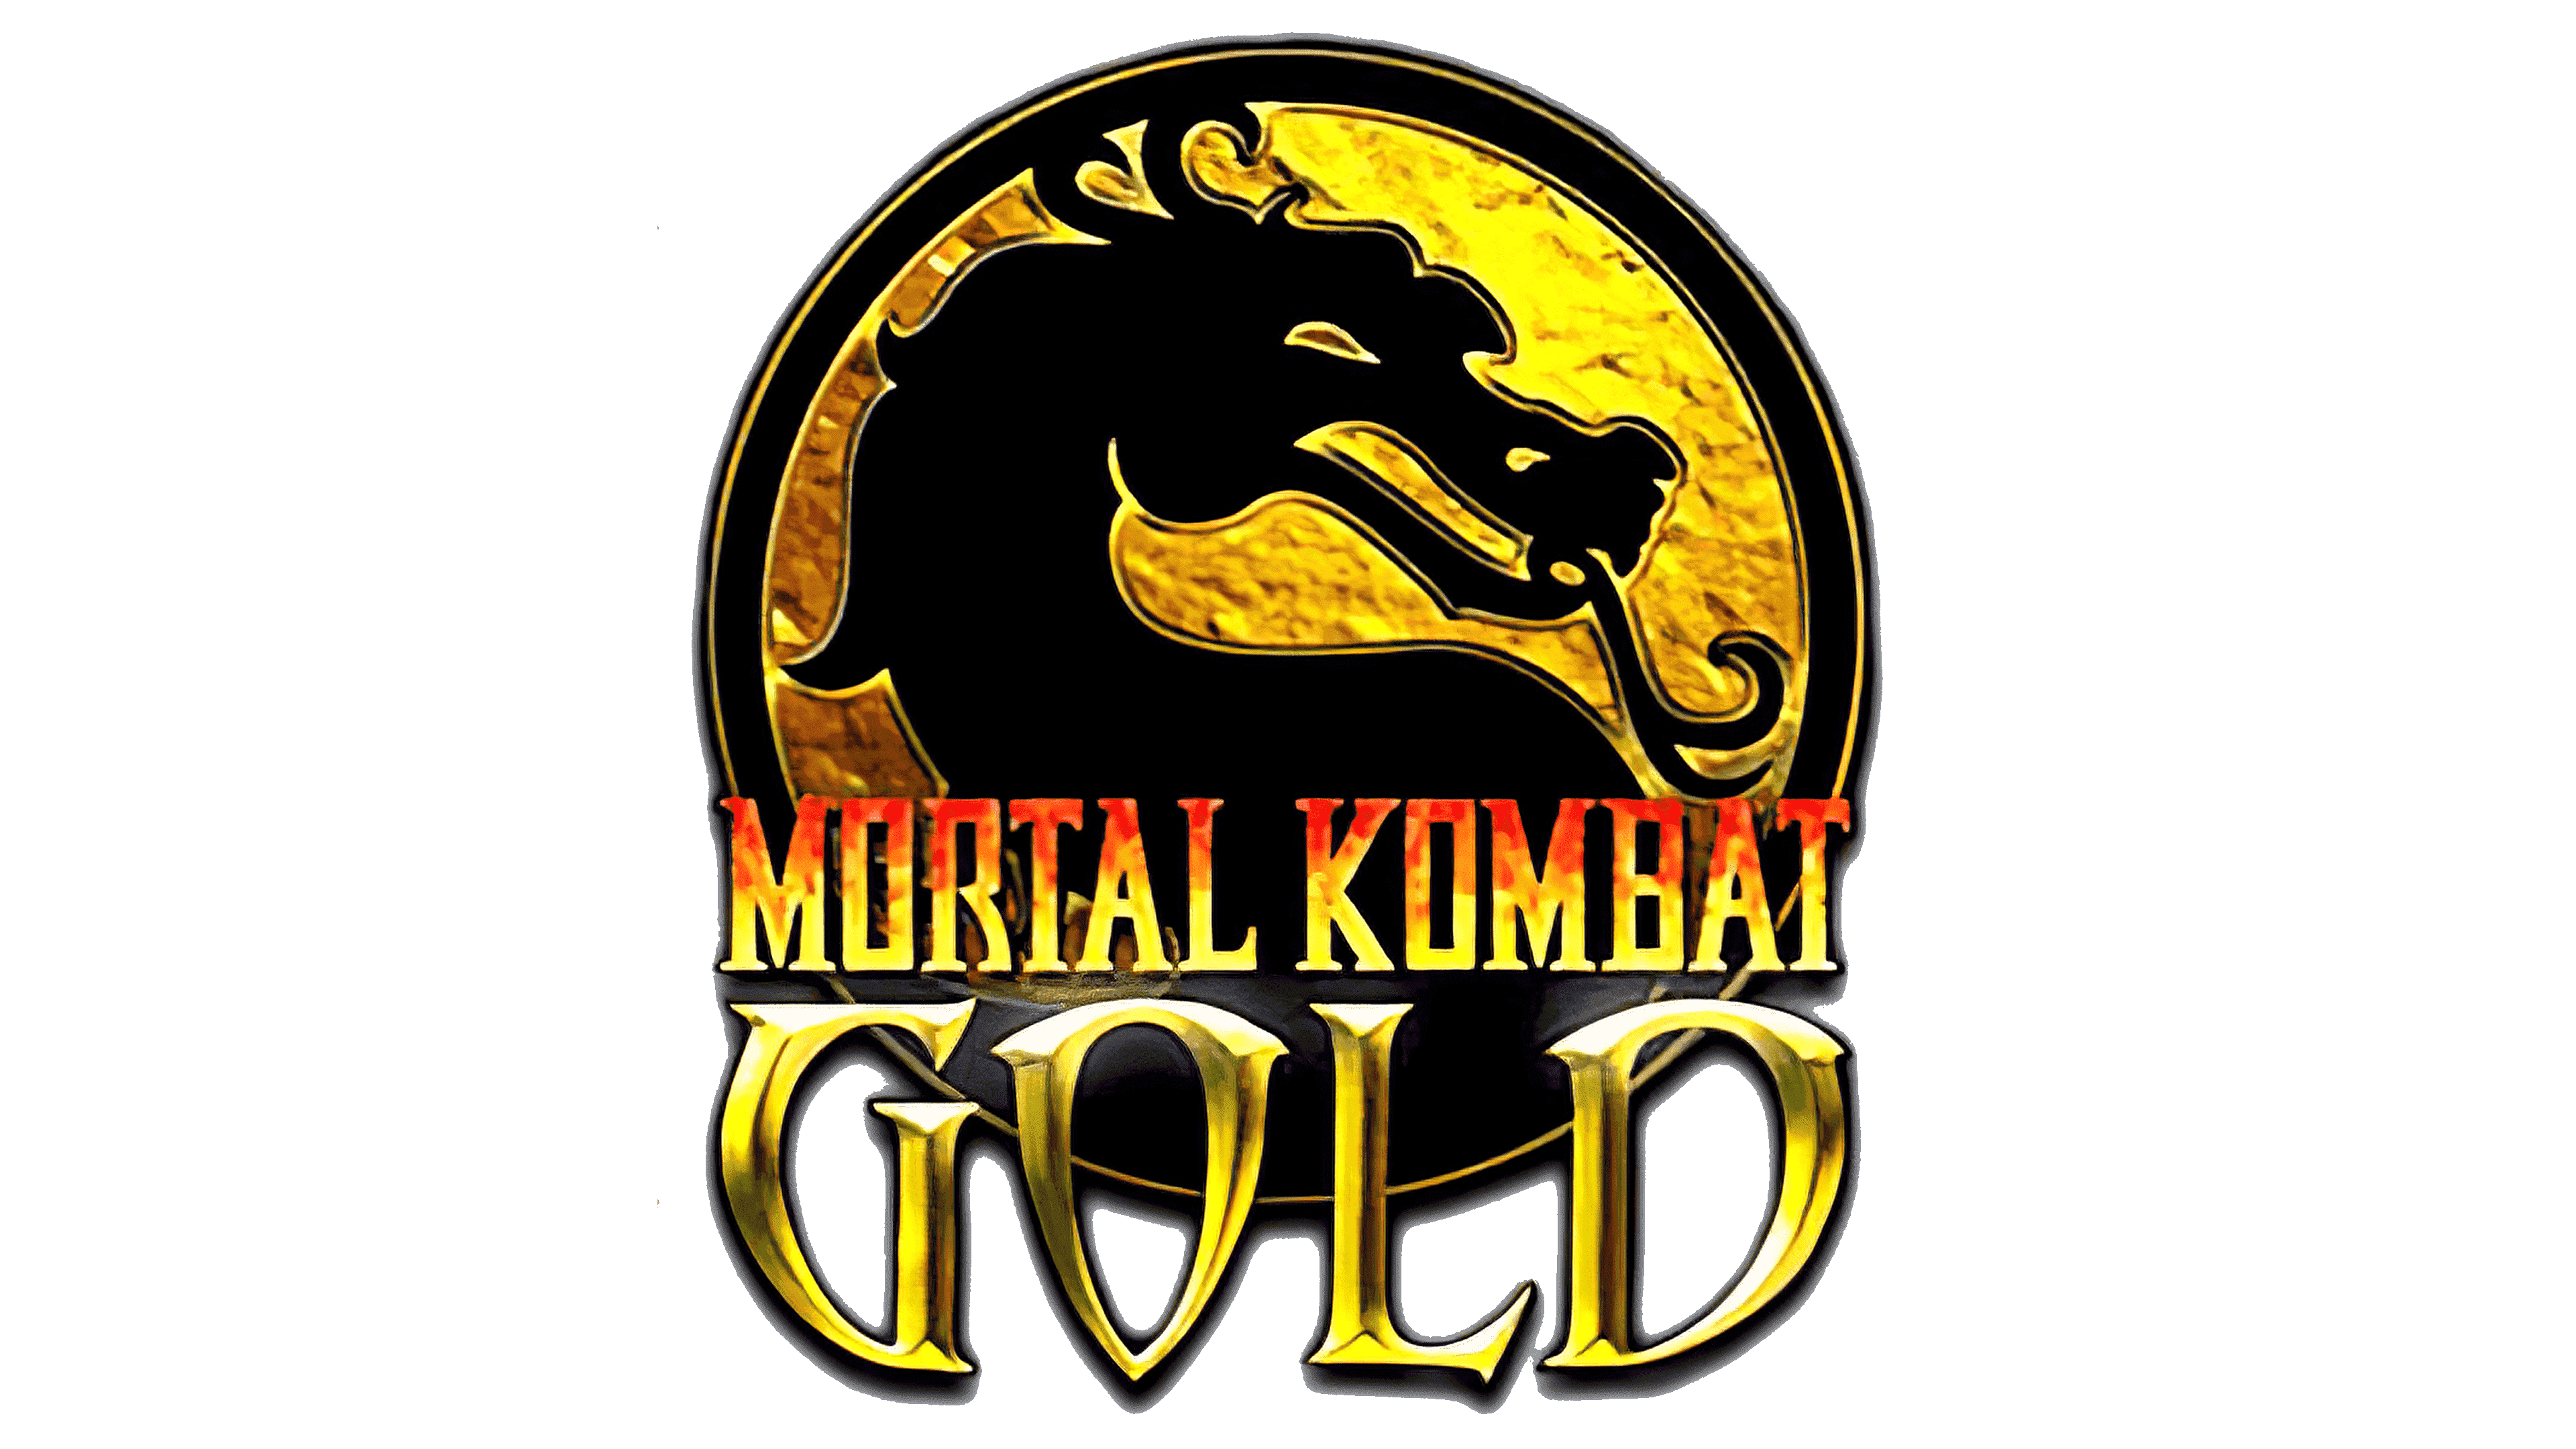 Души и монеты мортал комбат. Мортал комбат 4 Голд. MK Gold Dreamcast. Mortal Kombat Gold. Mortal Kombat Gold (1999).